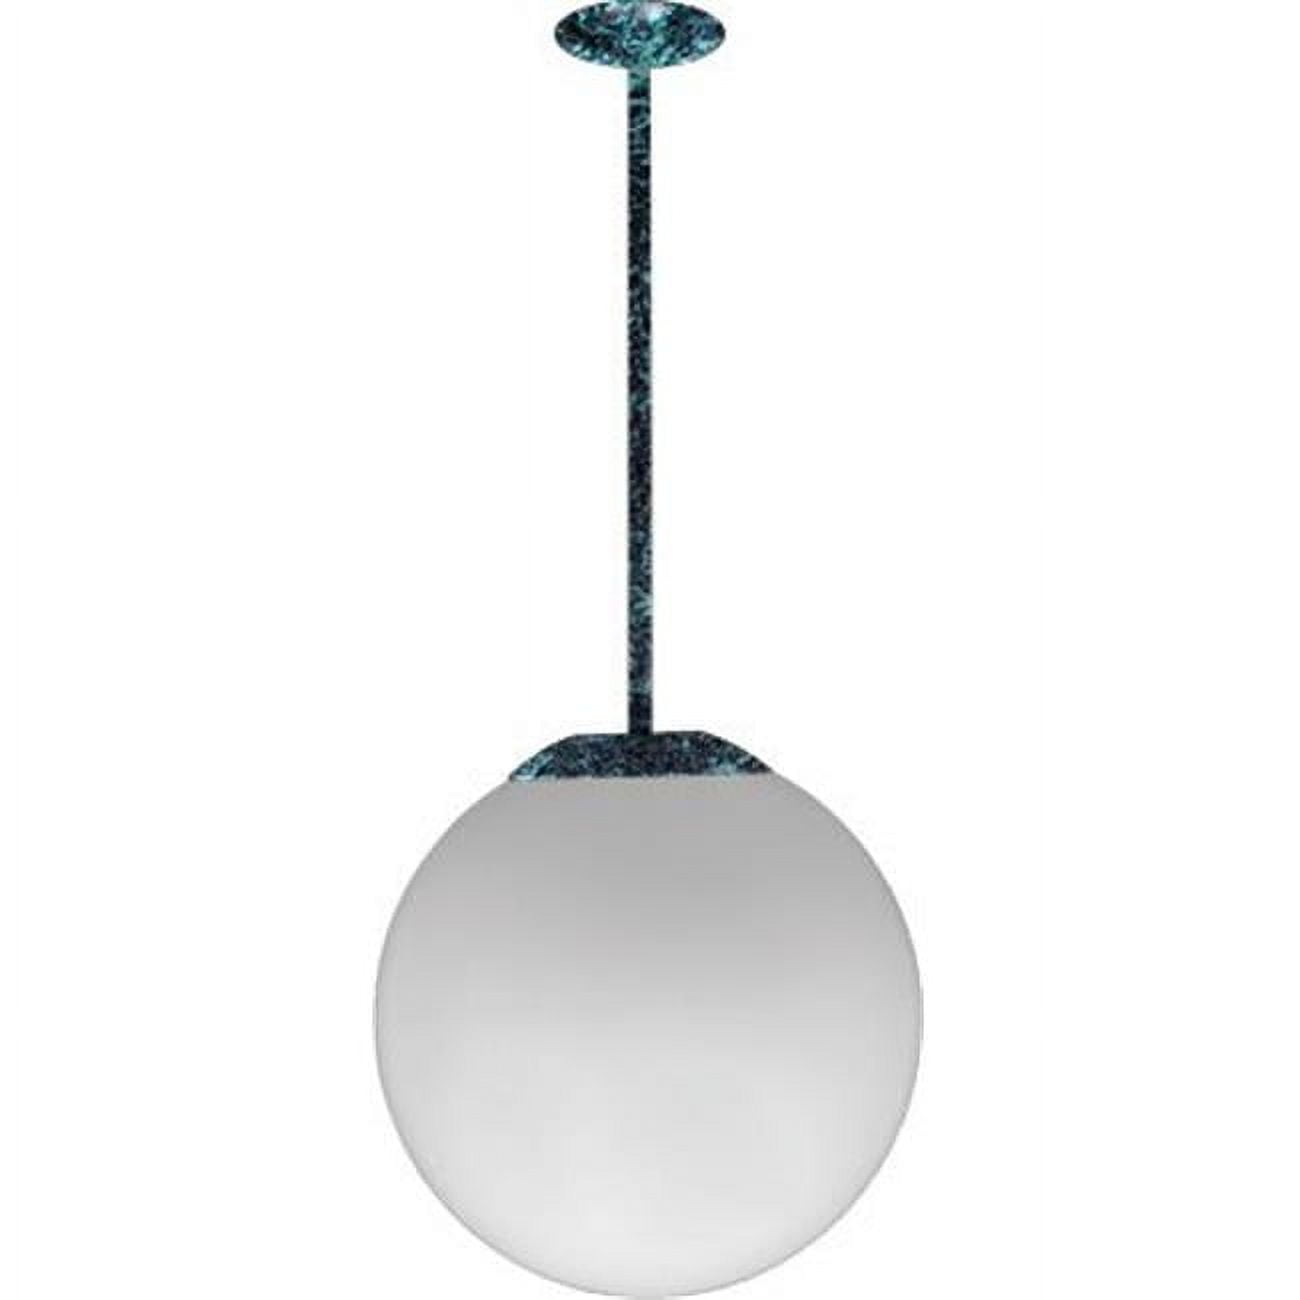 D7516-18-vg 18 In. 120 V 50 Watts Ceiling Globe Fixture 18 In. Drop With Metal Halide Lamp, Verde Green